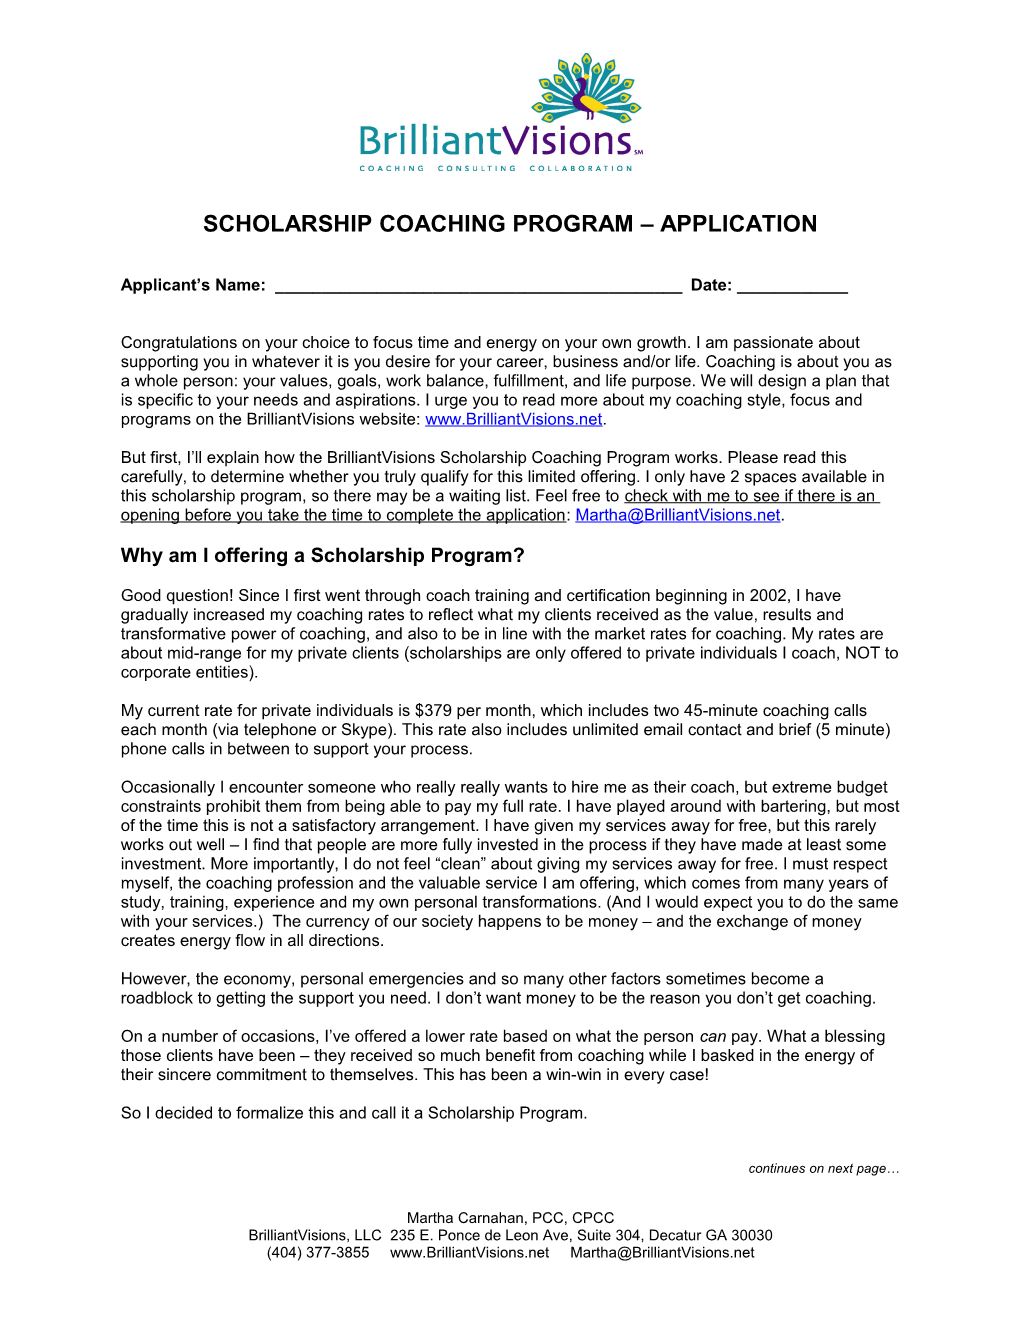 Scholarship Coaching Program Application